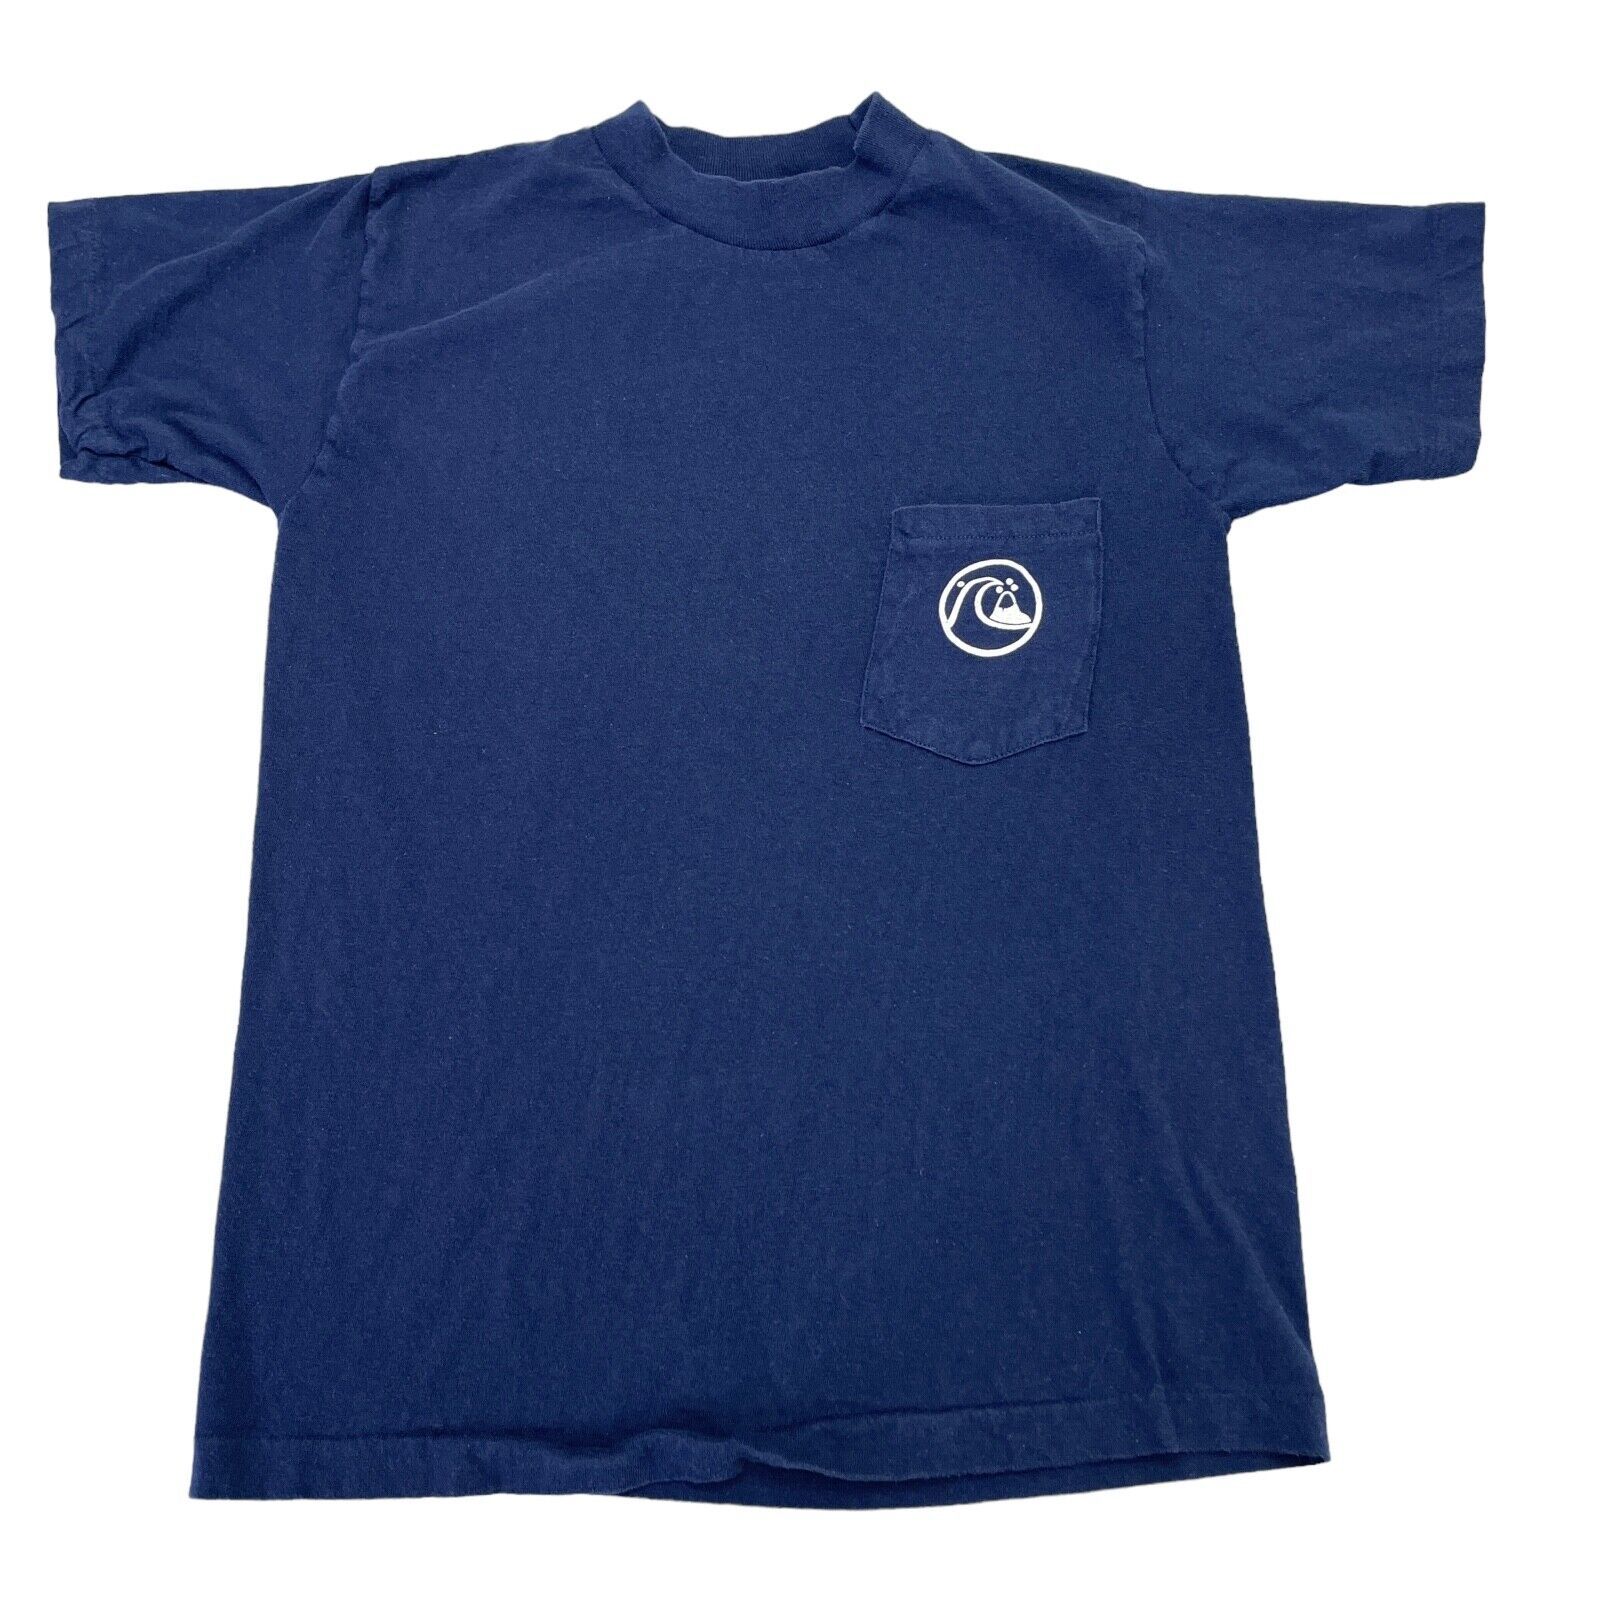 Vtg Quiksilver T-shirt 70s 80s Short Sleeve Pocket Single Stitch Surf 17"x24" - $99.00